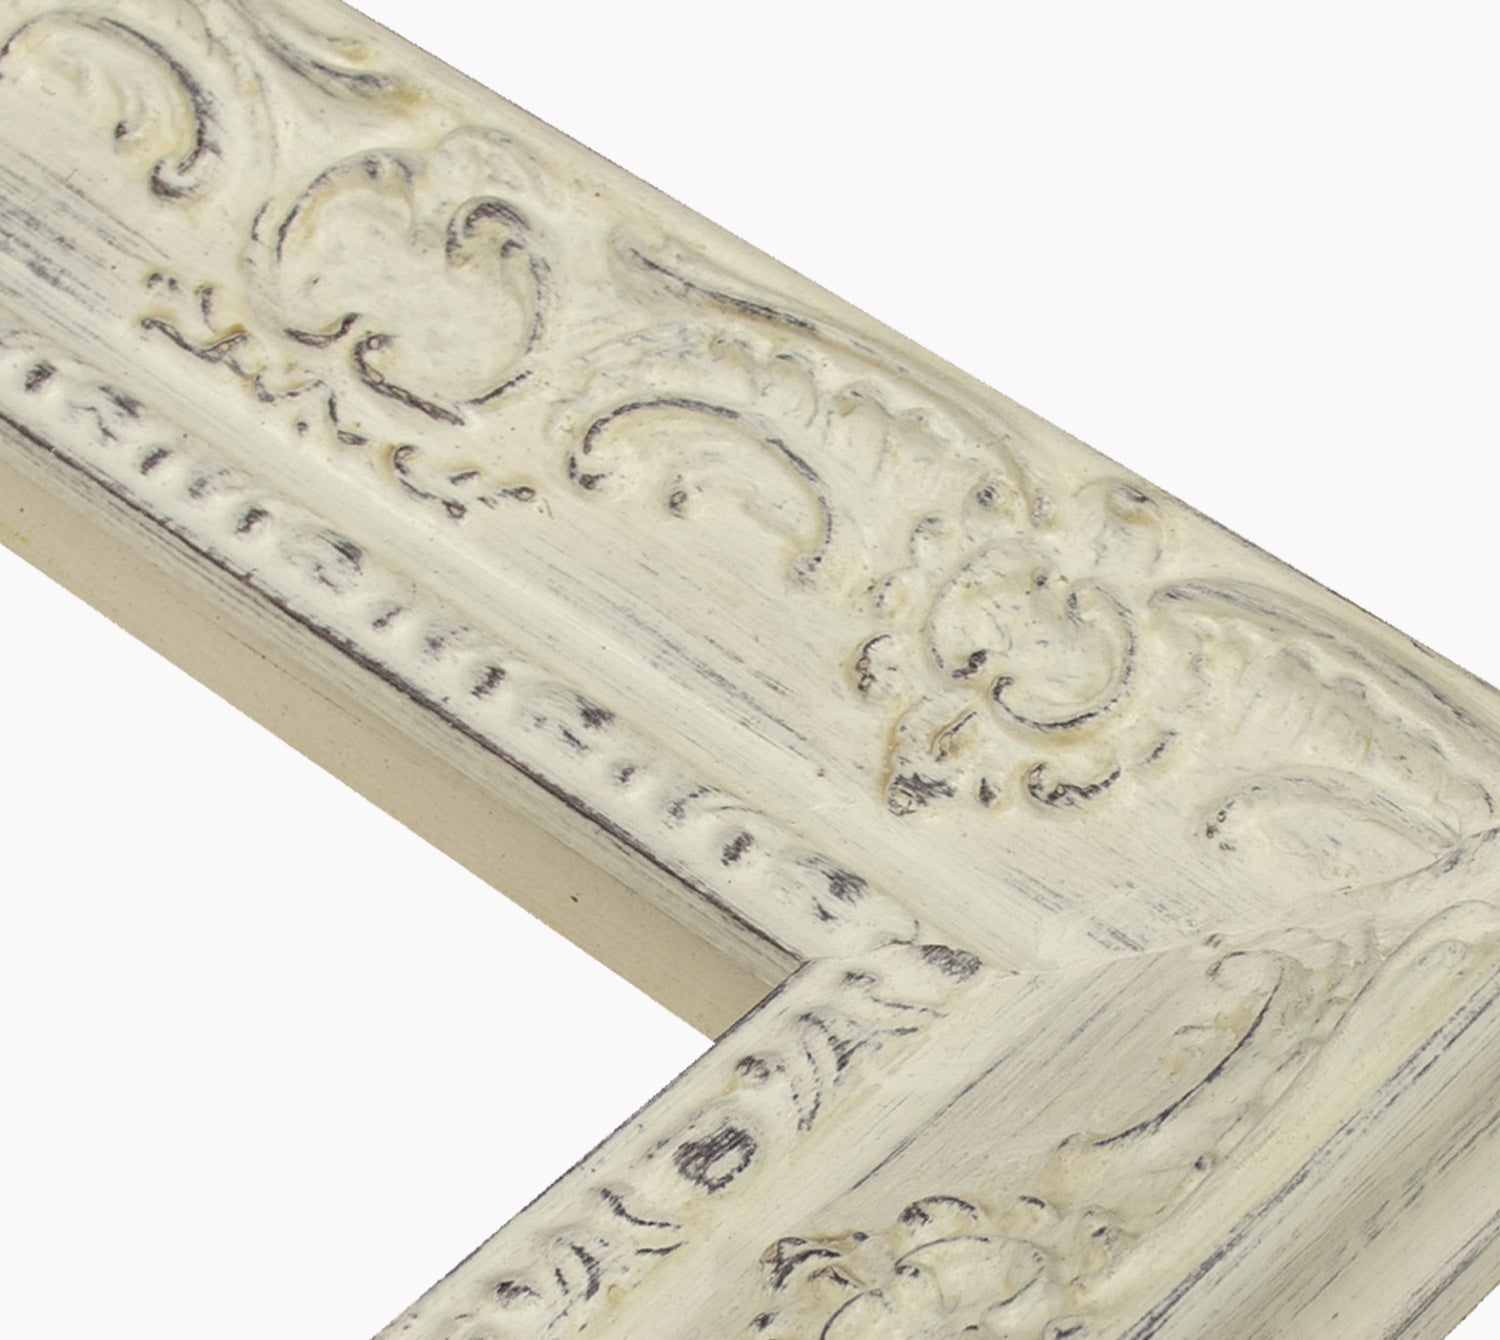 631.920 cadre en bois blanc avec fond marron mesure de profil 65x55 mm Lombarda cornici S.n.c.